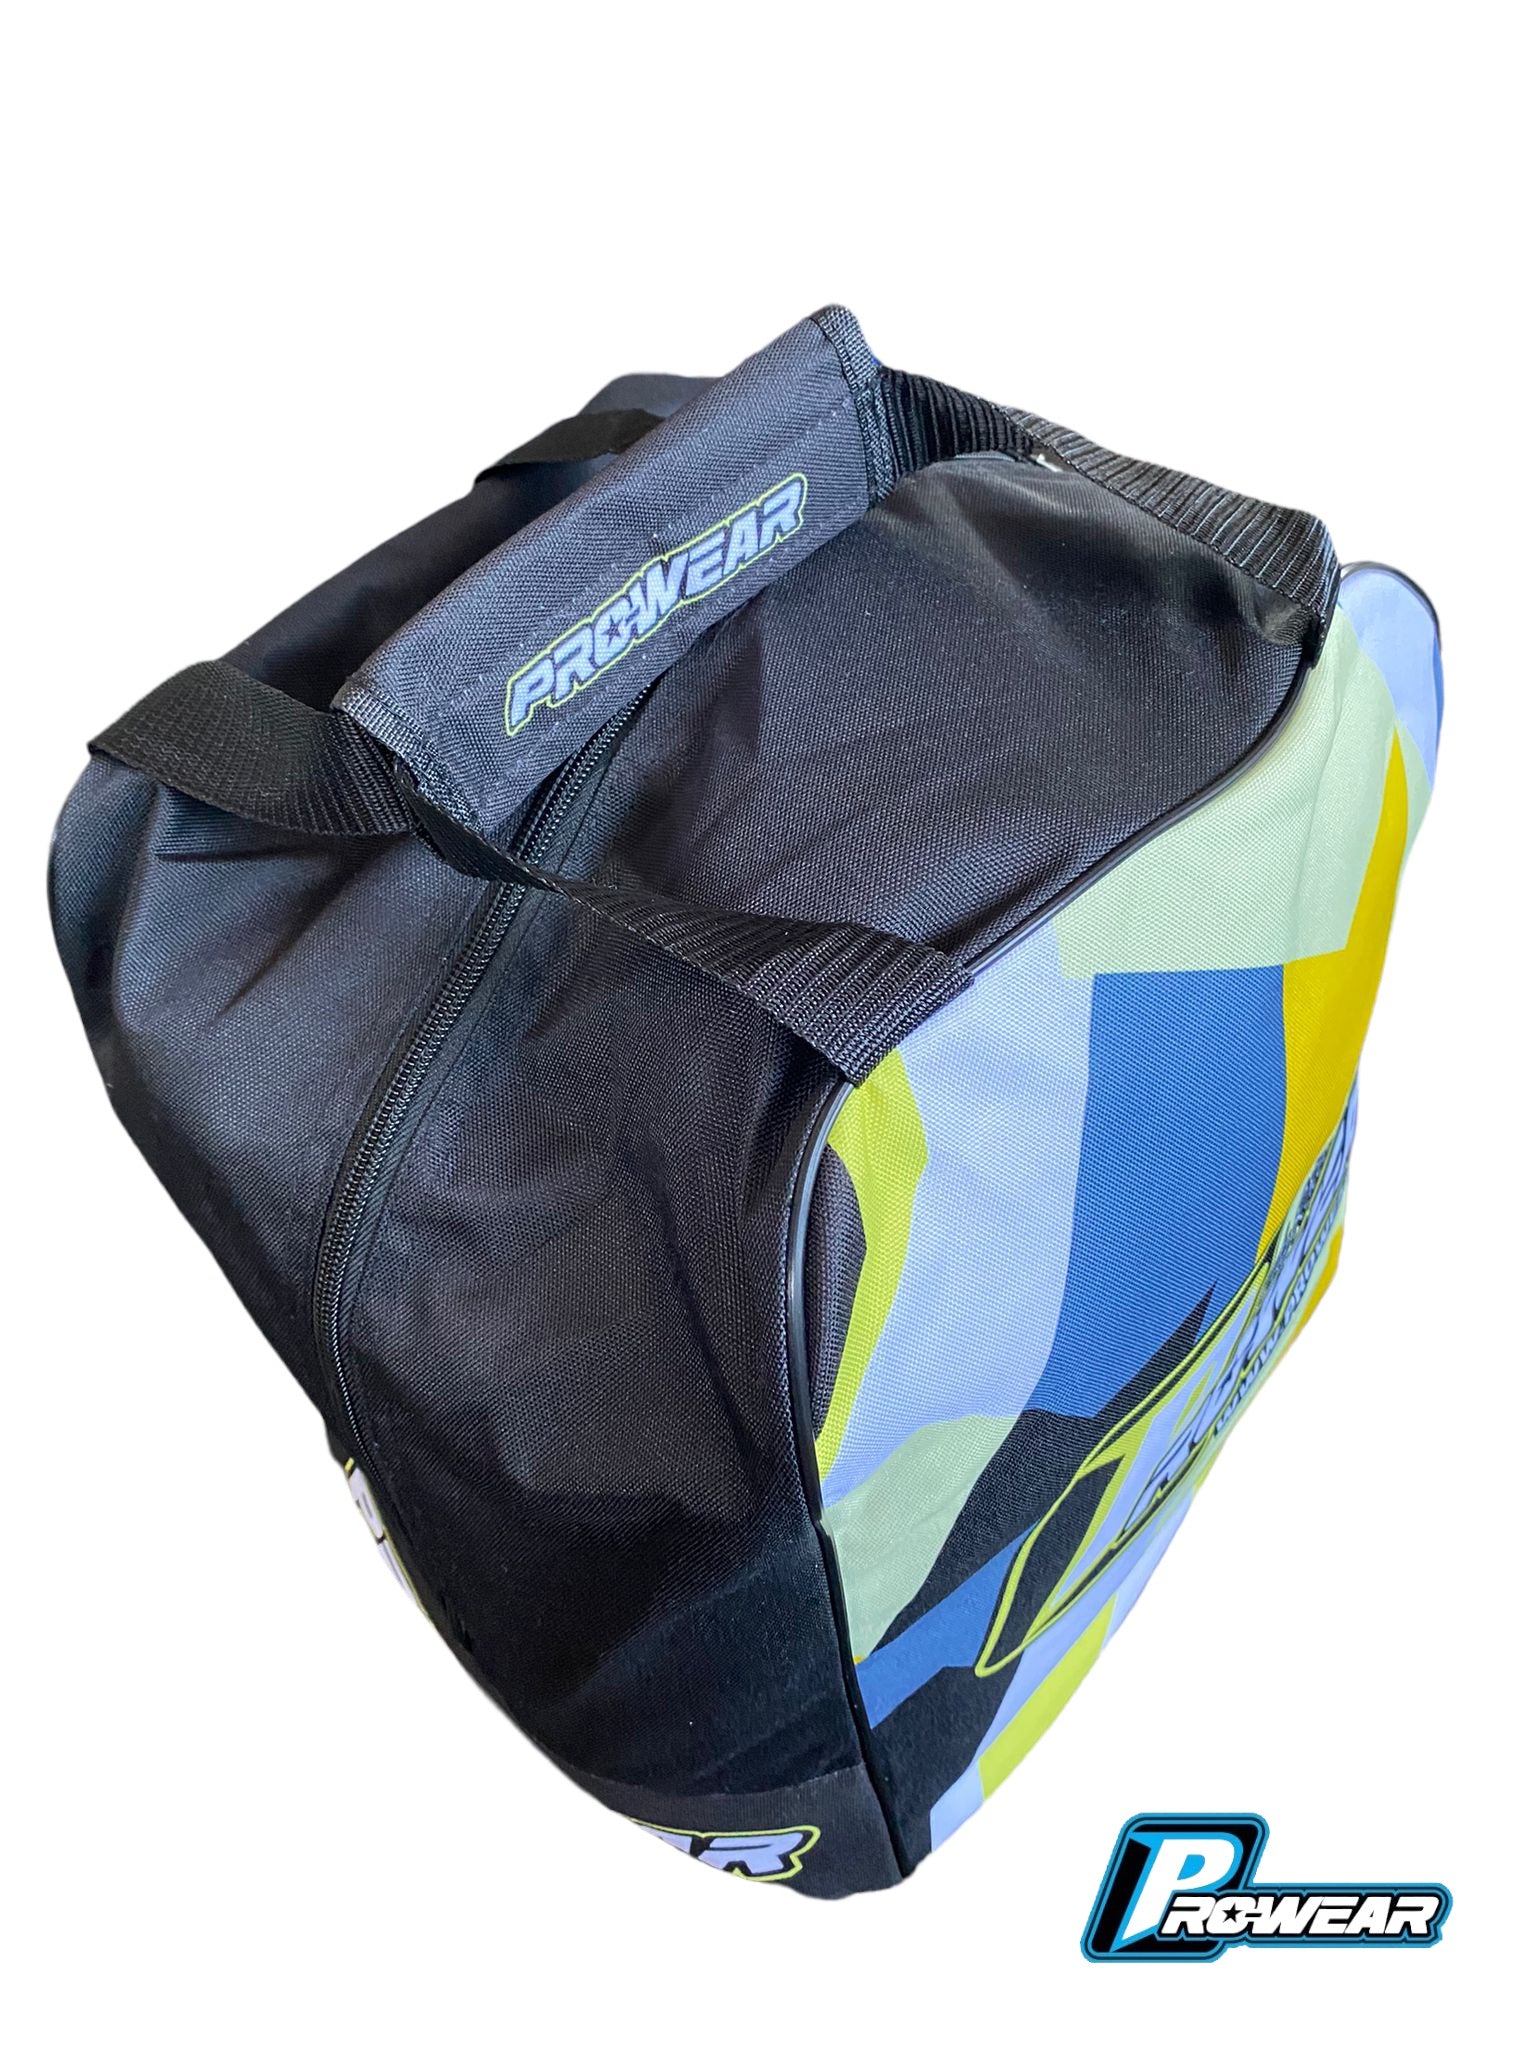 Helmet/Race Suit Bag